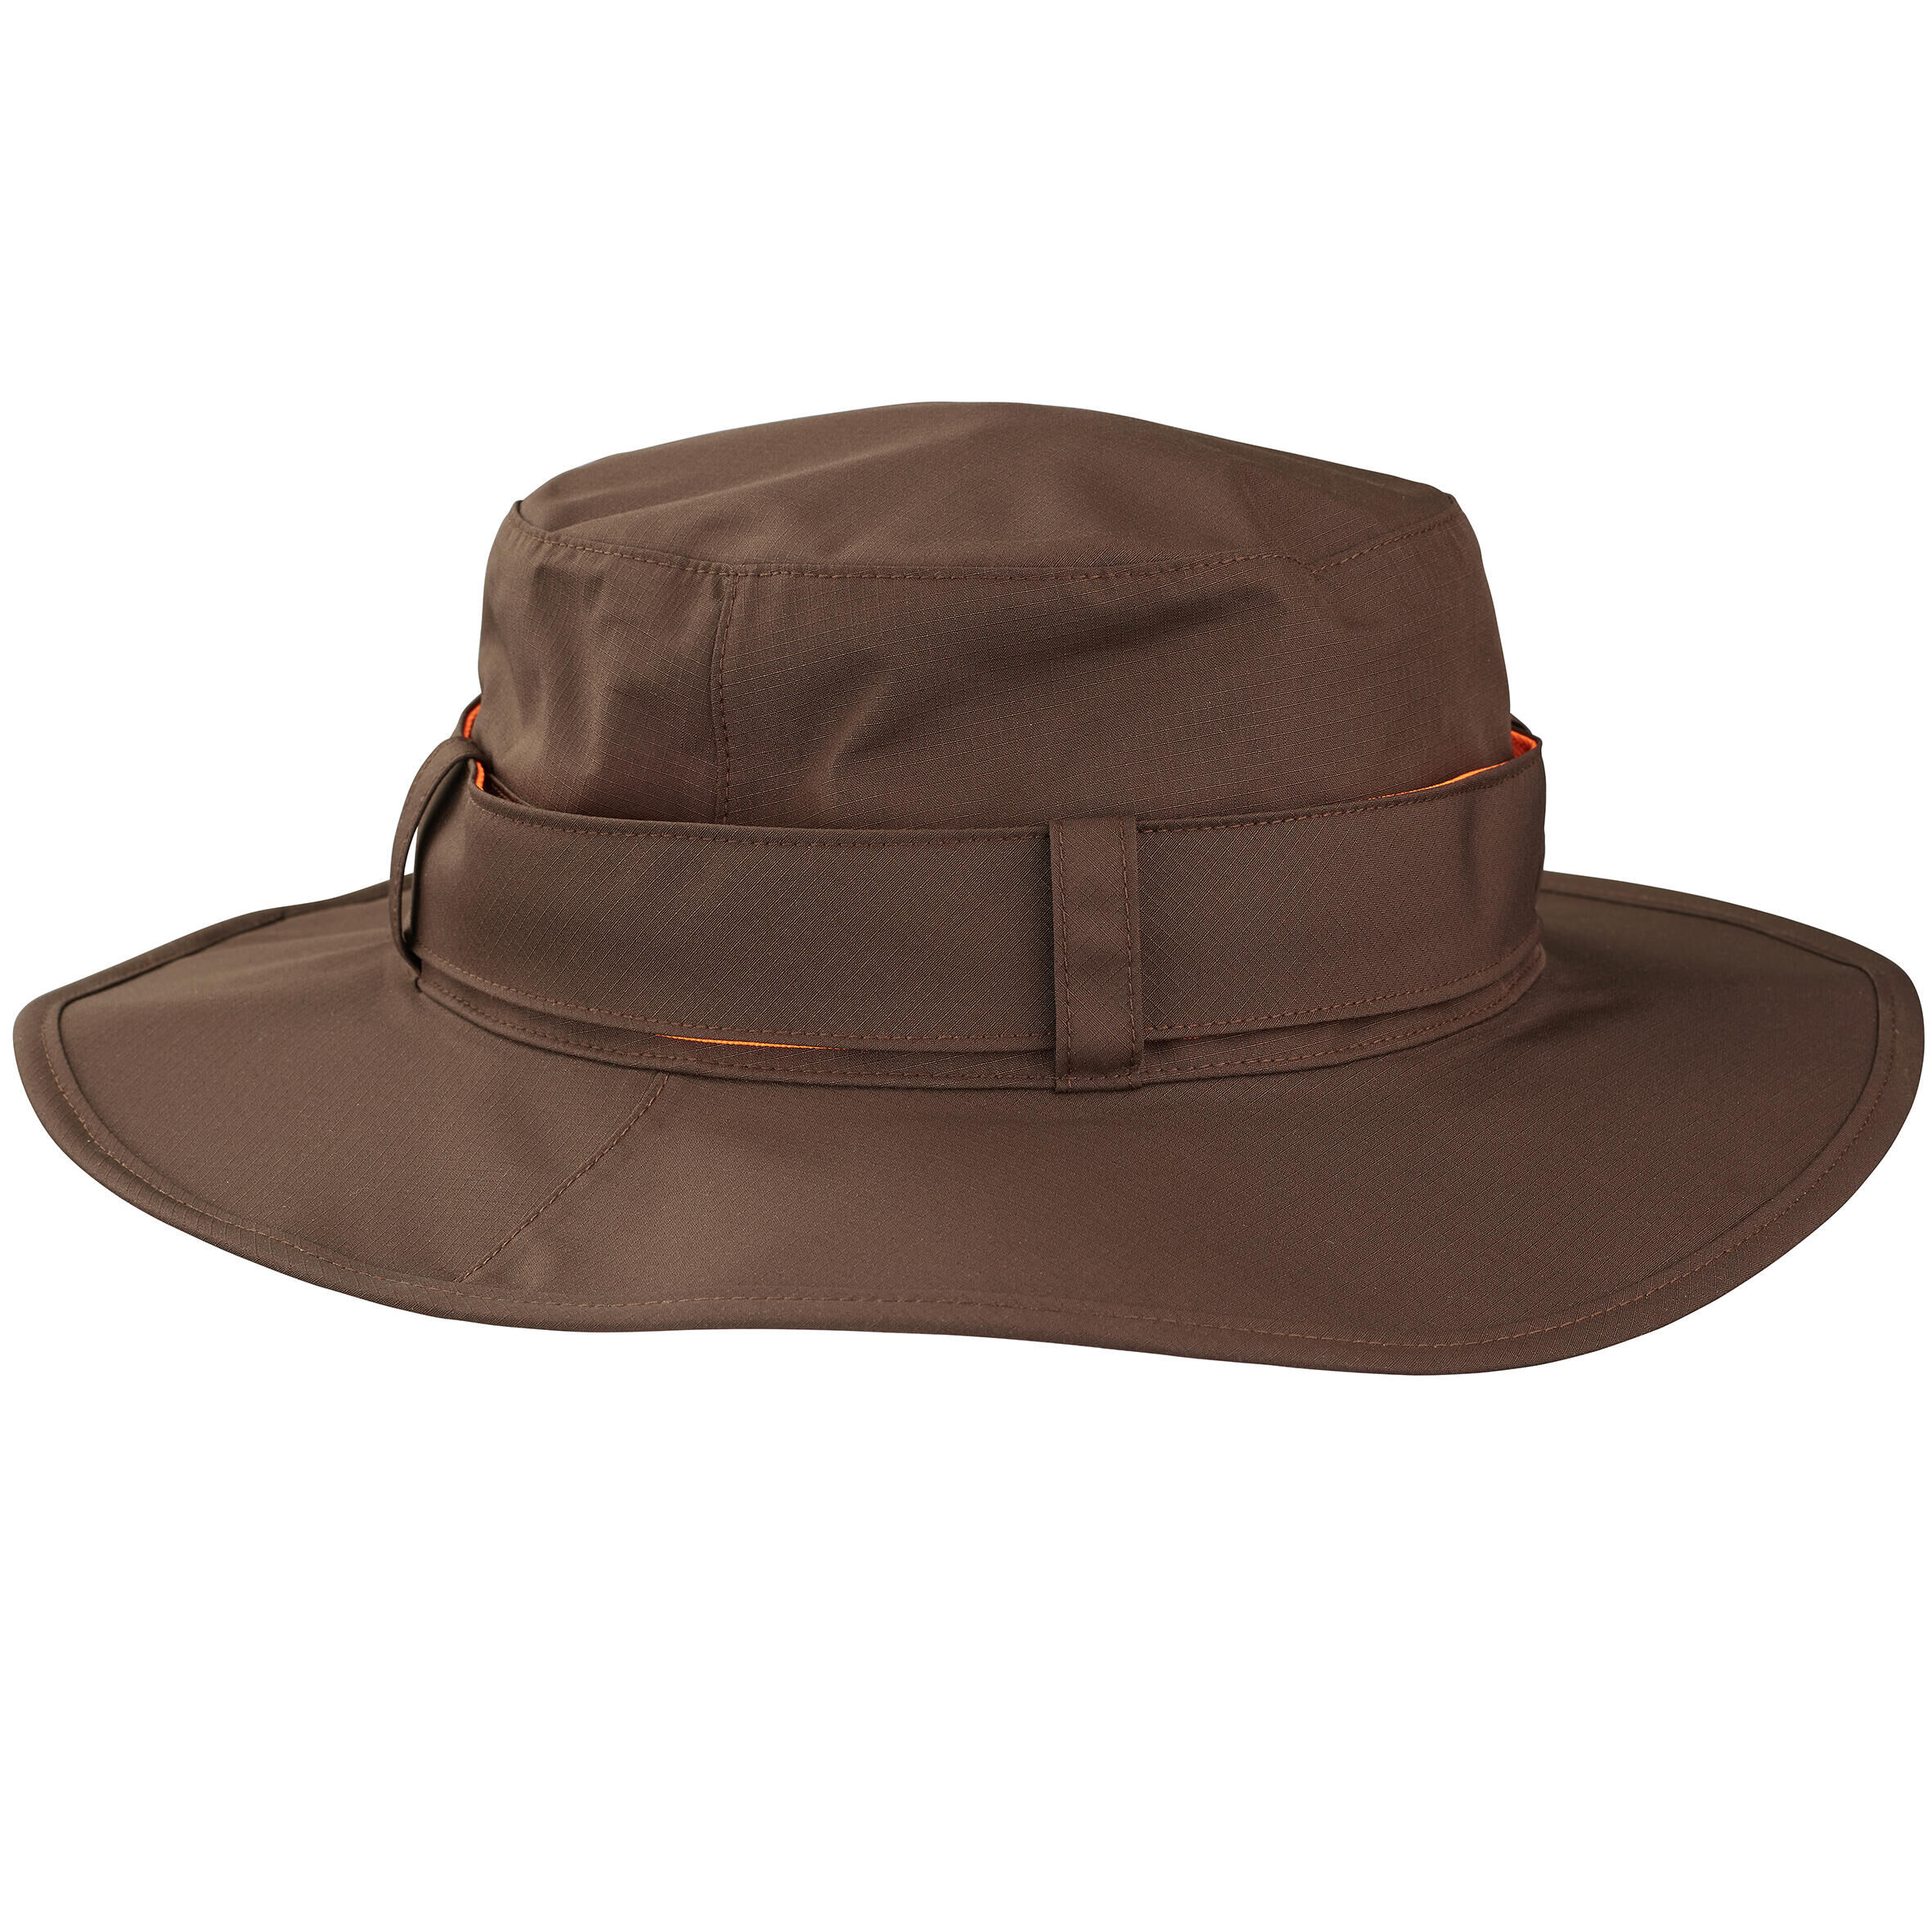 SOLOGNAC Waterproof Durable Country Sport Bucket Hat 520 - Brown